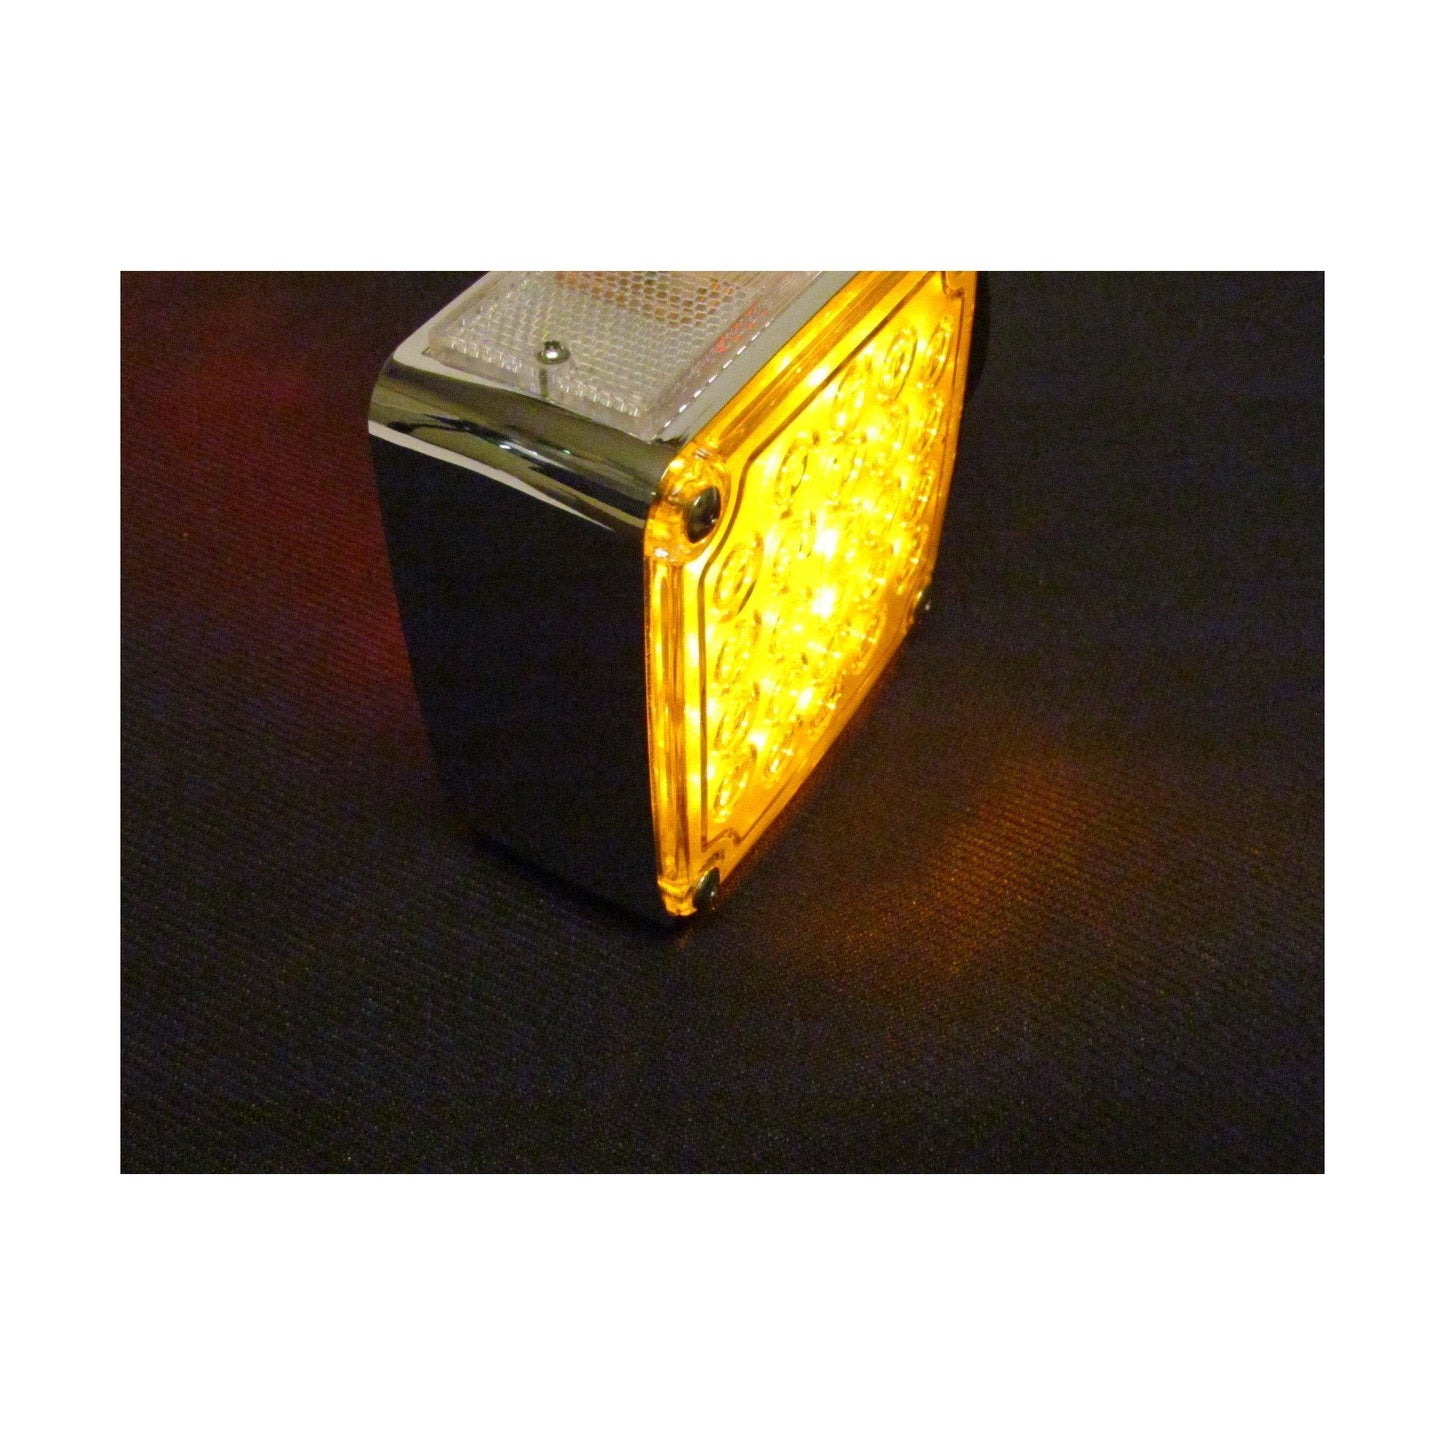 Fortpro Square Chrome Pedestal Led Light with 24 LEDs and Clear Lens - Passenger Side | F235251